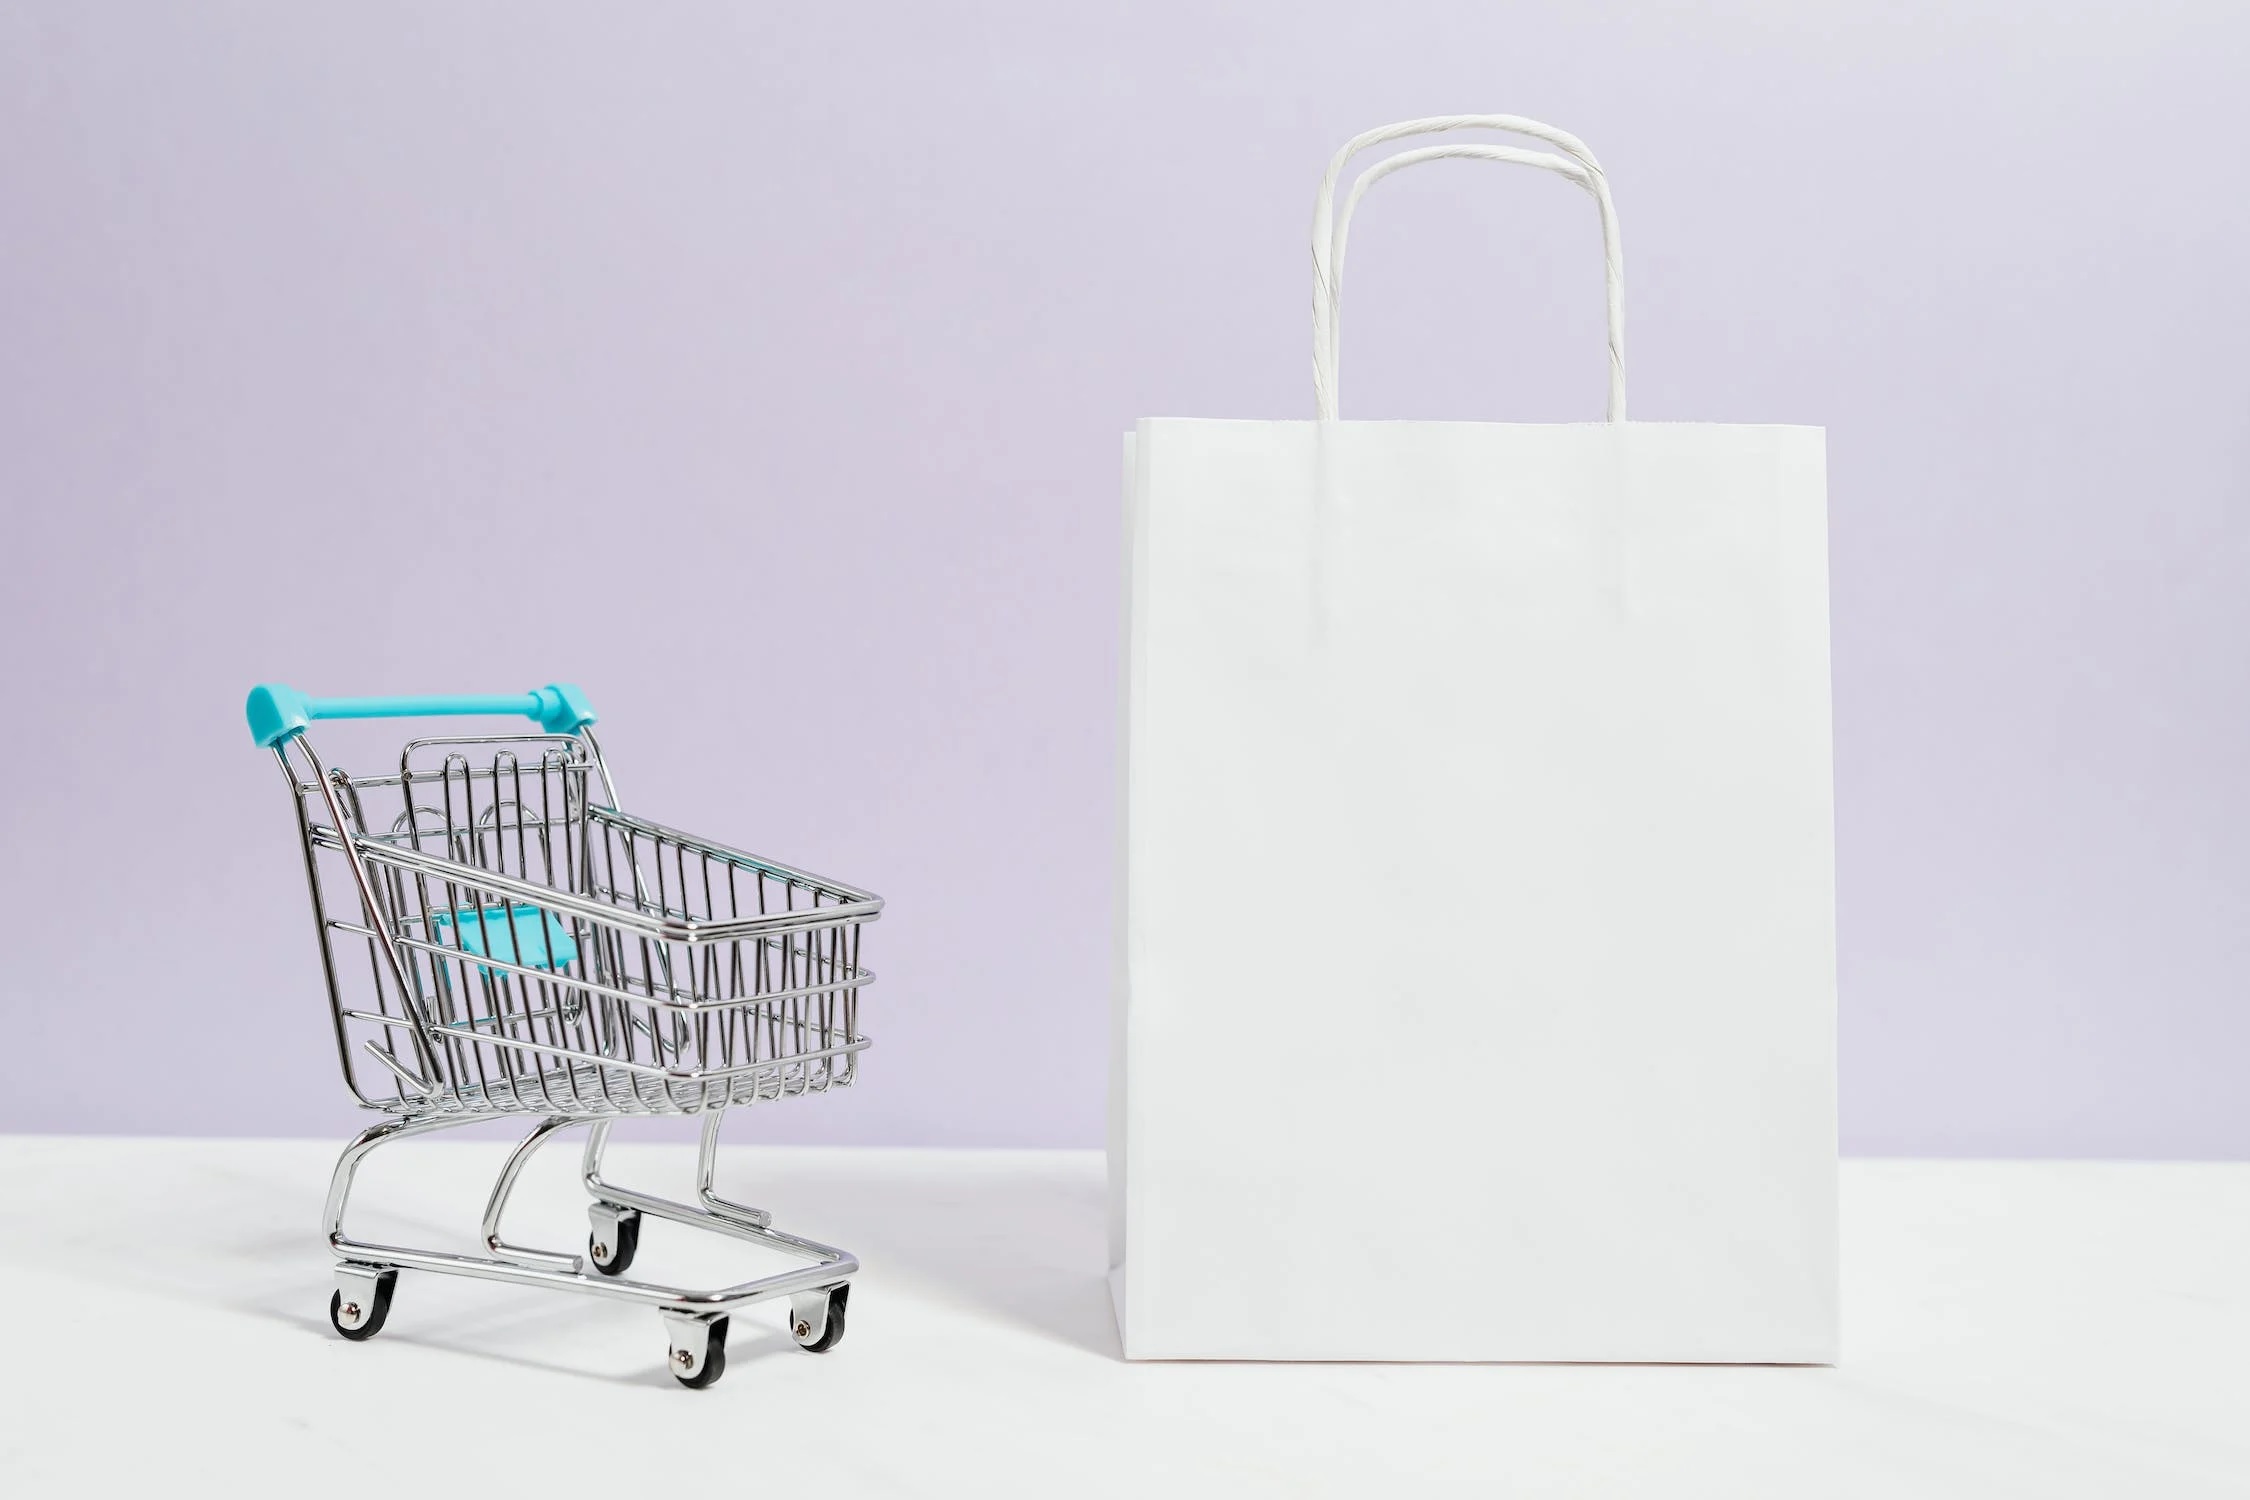 A miniature shopping cart next to a white paper bag.